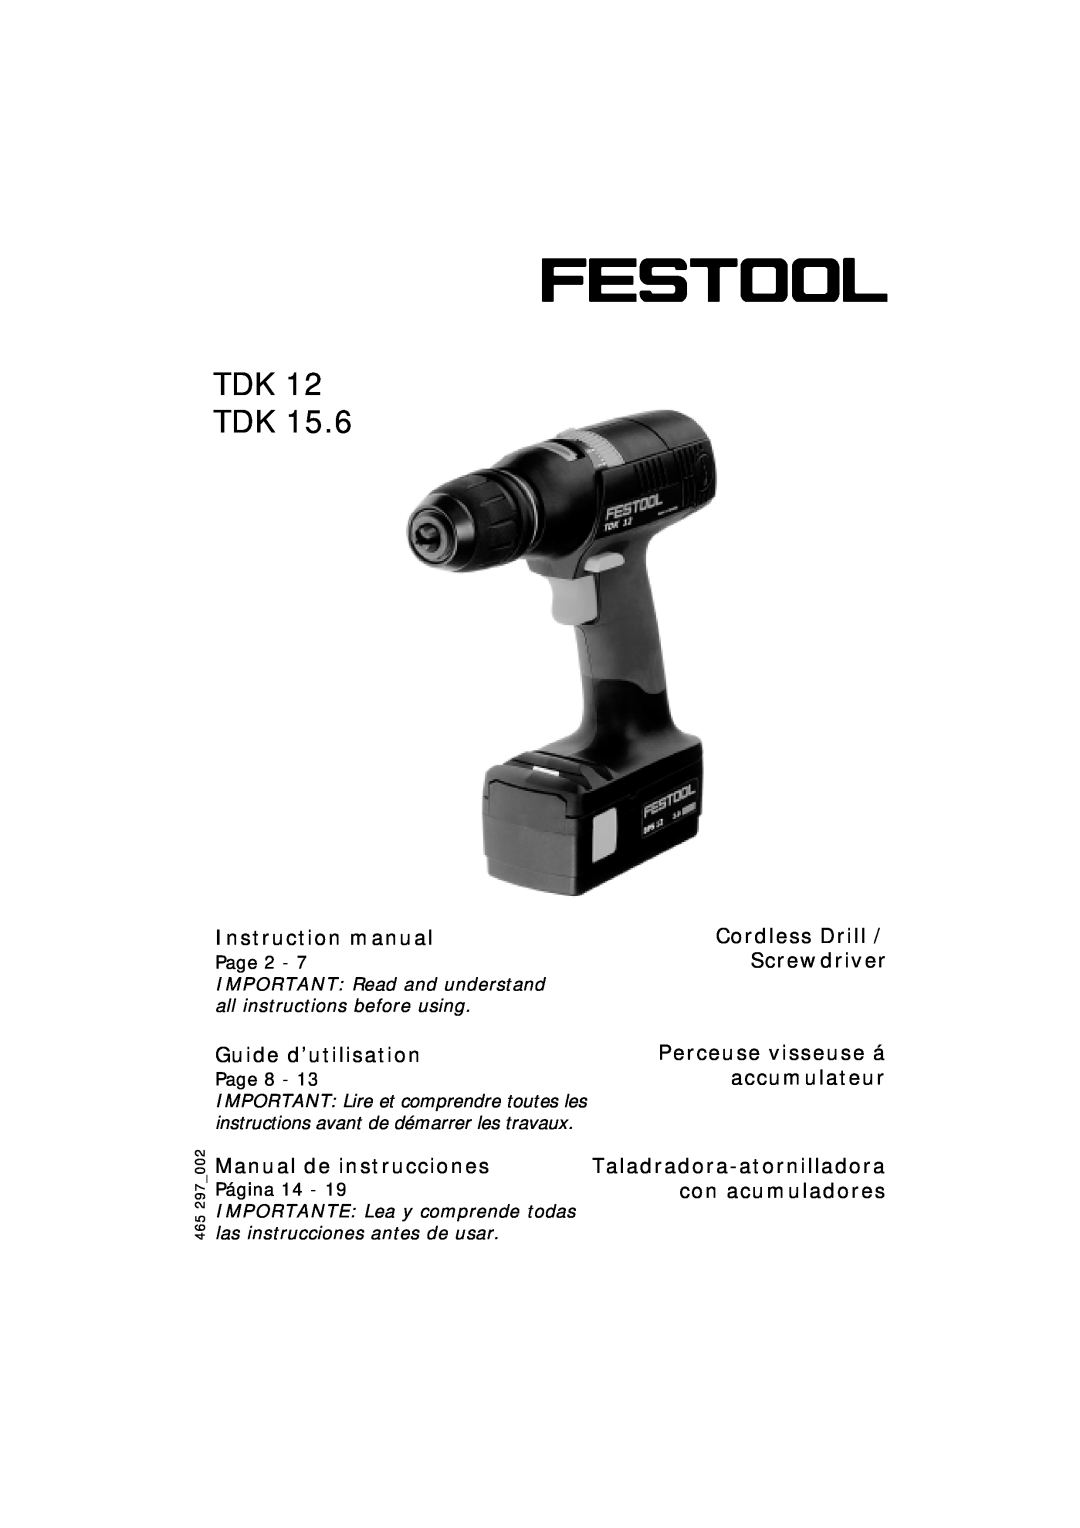 Festool TDK 12 instruction manual Tdk Tdk, Instruction manual, Cordless Drill, Screwdriver, Guide d’utilisation, Page 2 